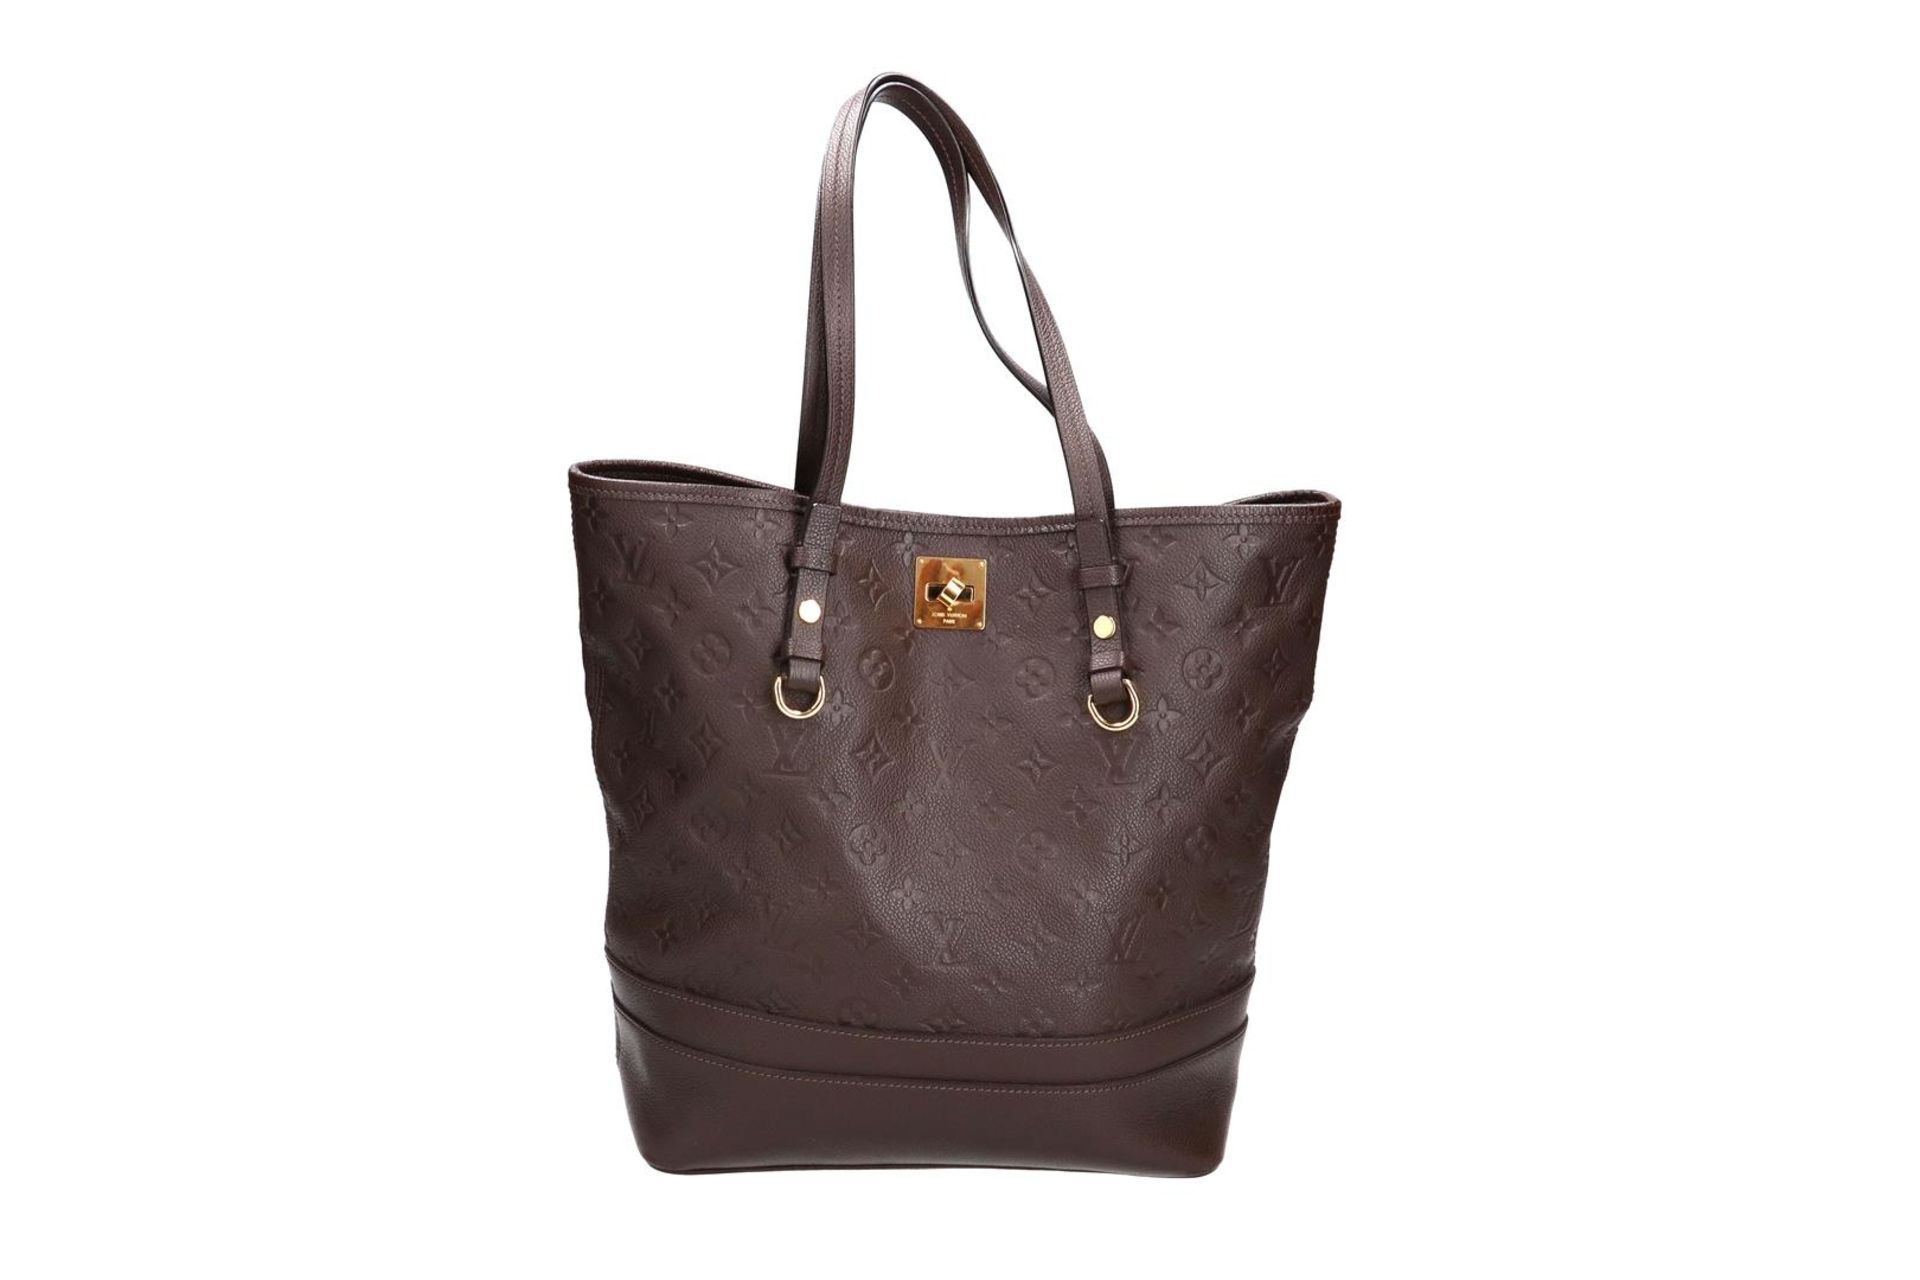 Louis Vuitton, brown leather embossed monogram tote bag, 'Citadines', no. AH2102. H x W x D: 31 x 31